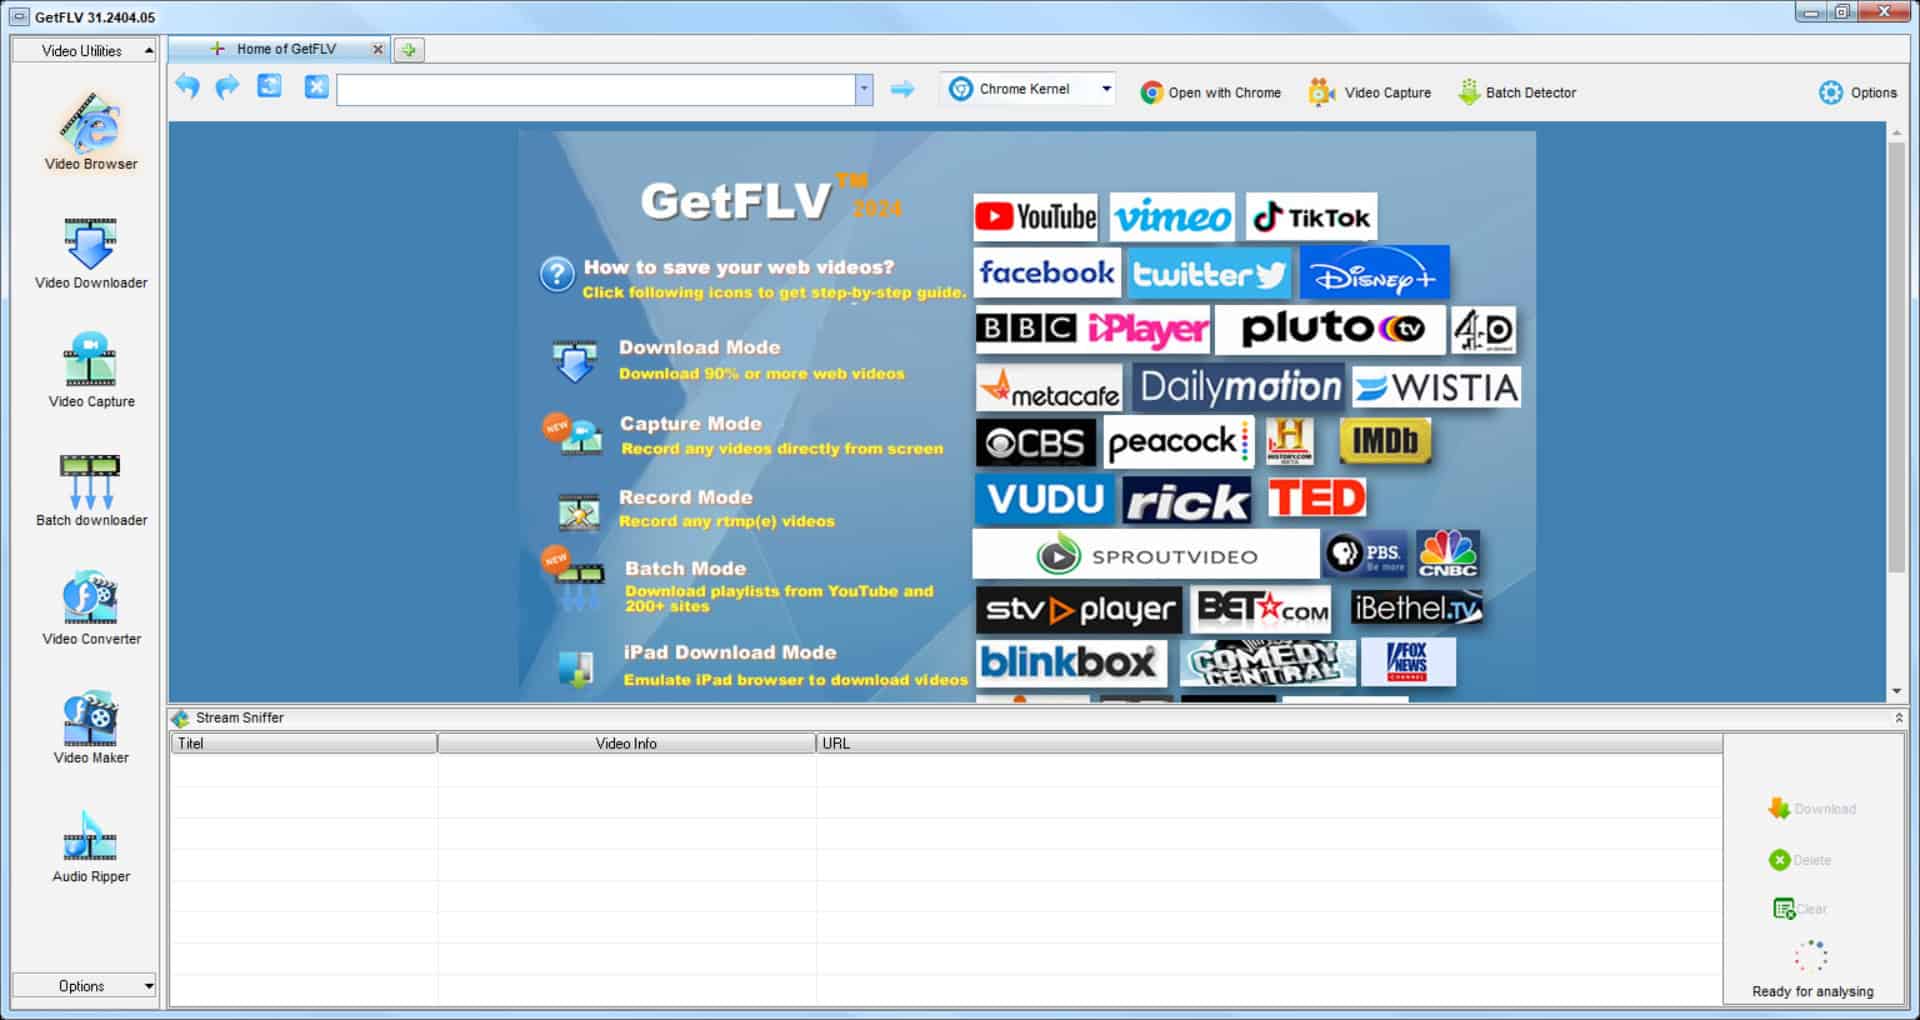 GetFLV interface